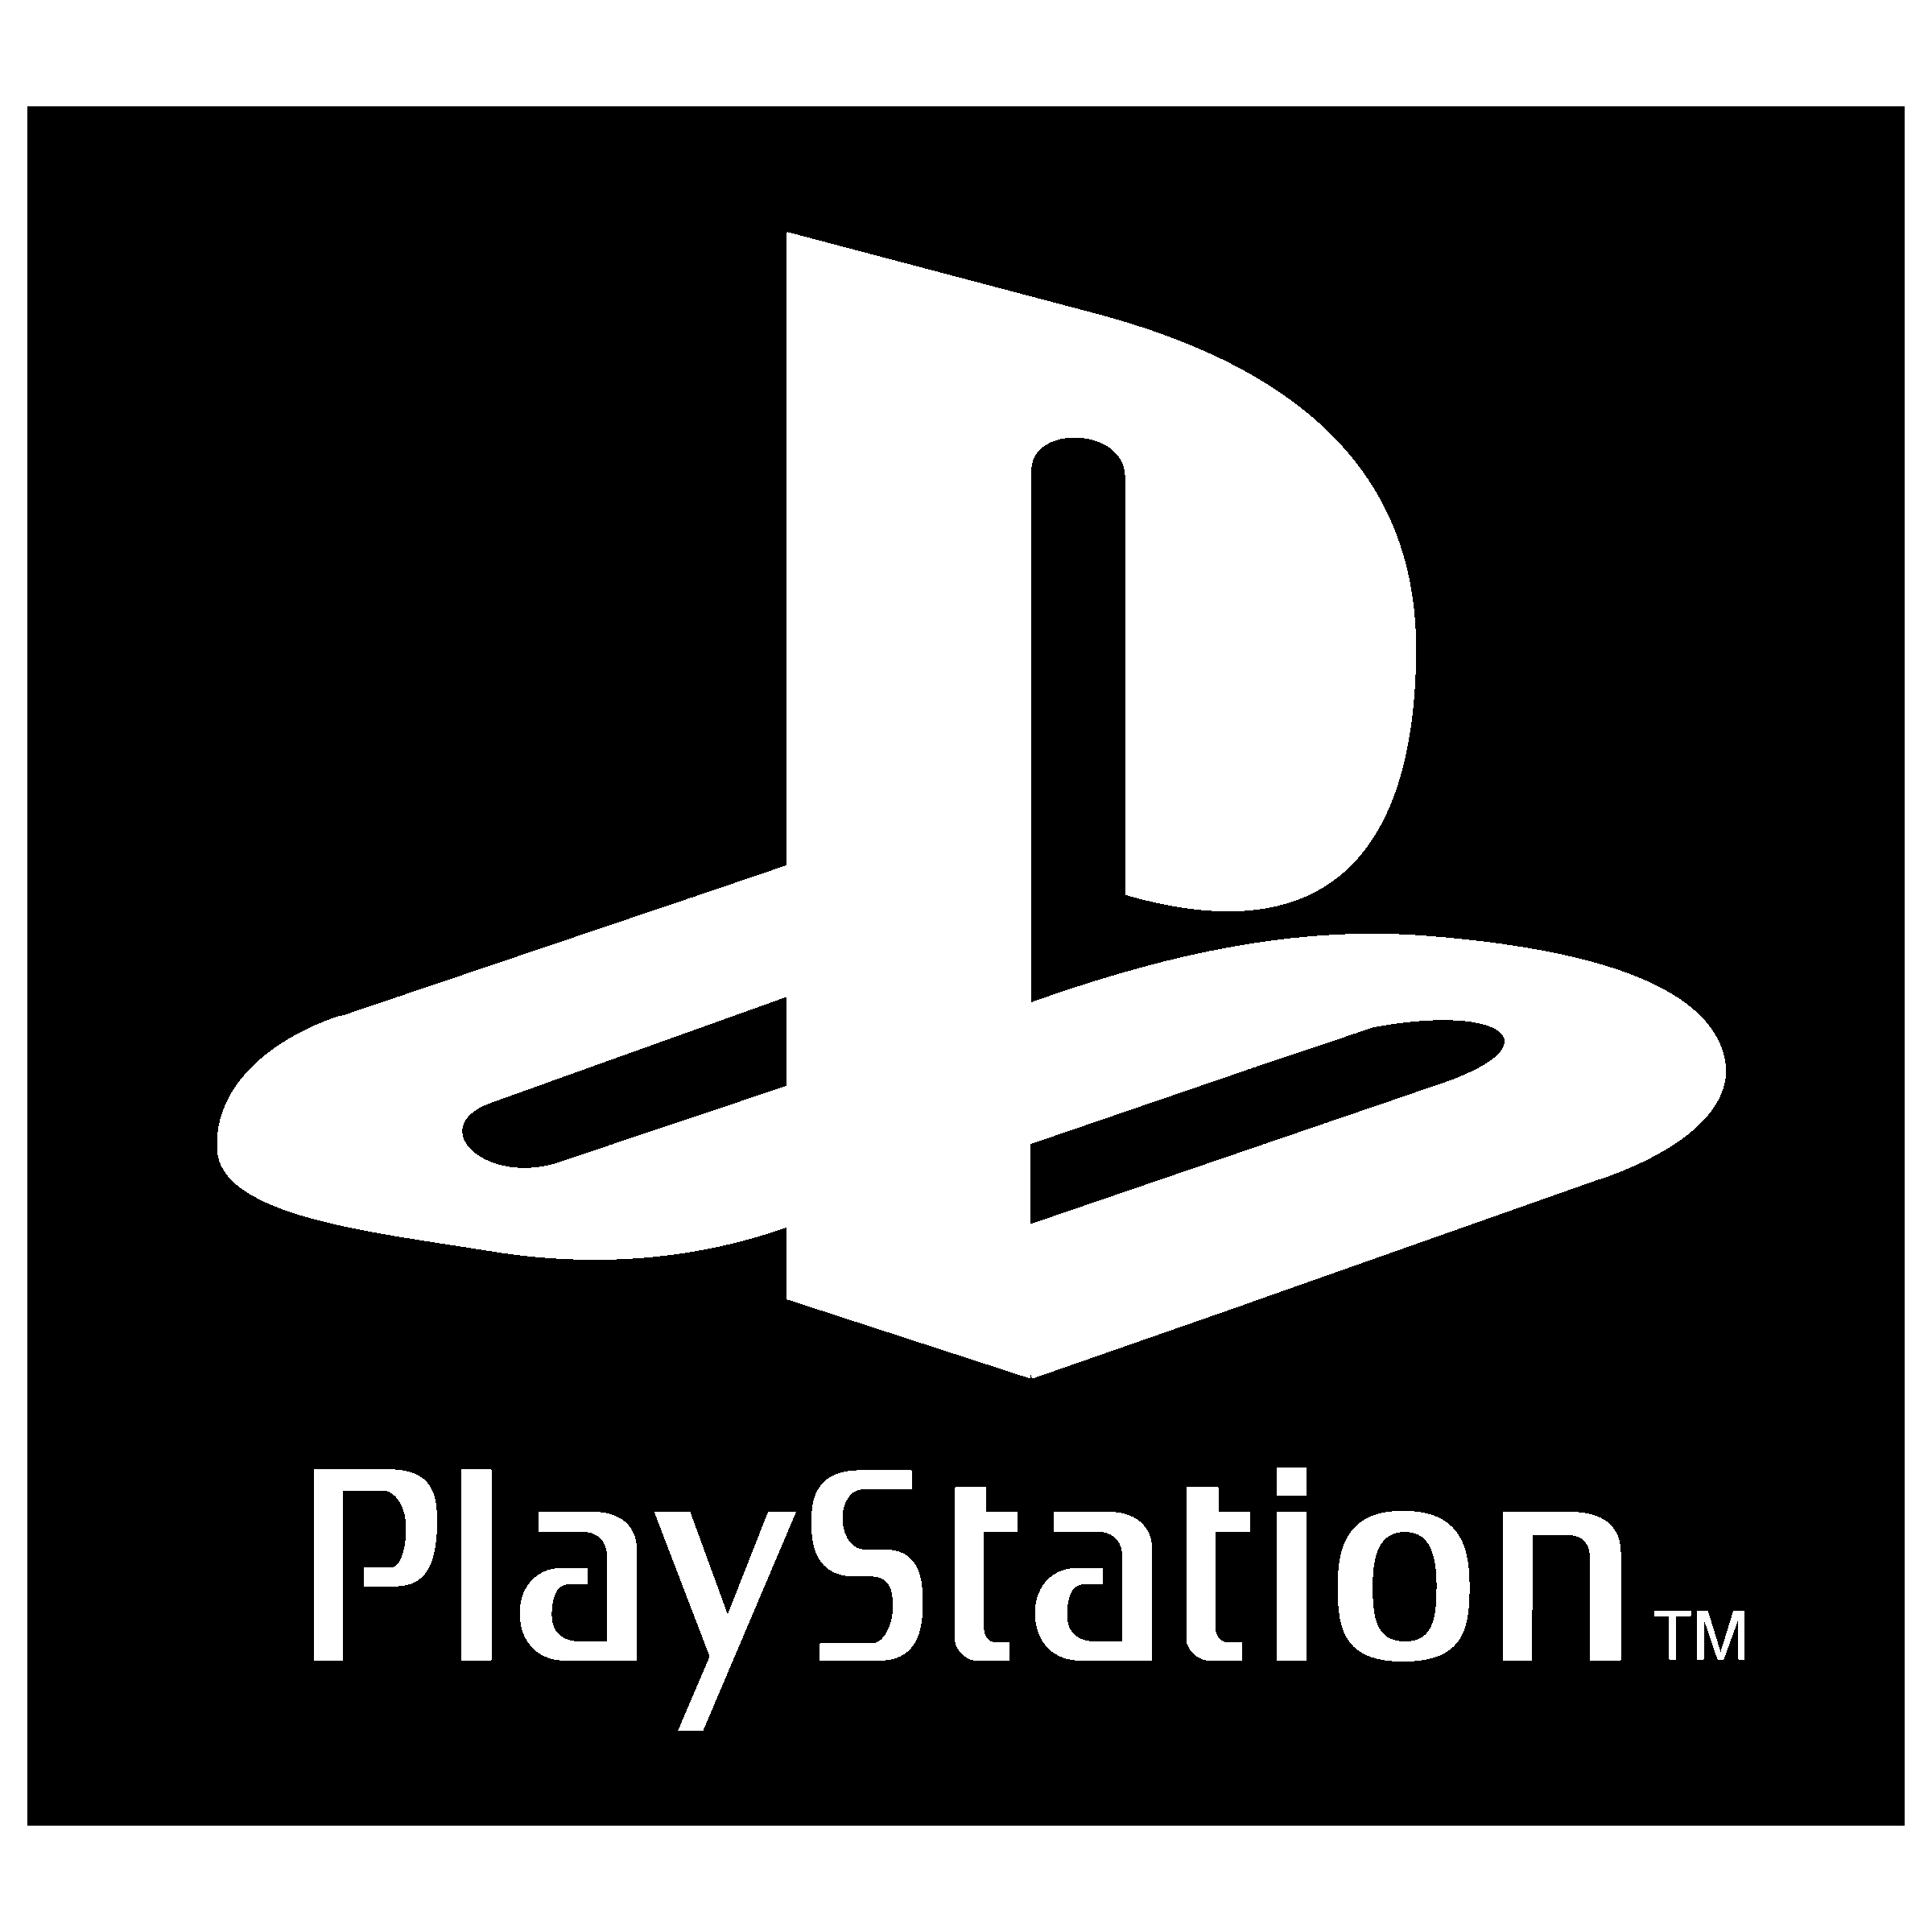 PlayStation Logo - PlayStation Logo PNG Transparent & SVG Vector - Freebie Supply